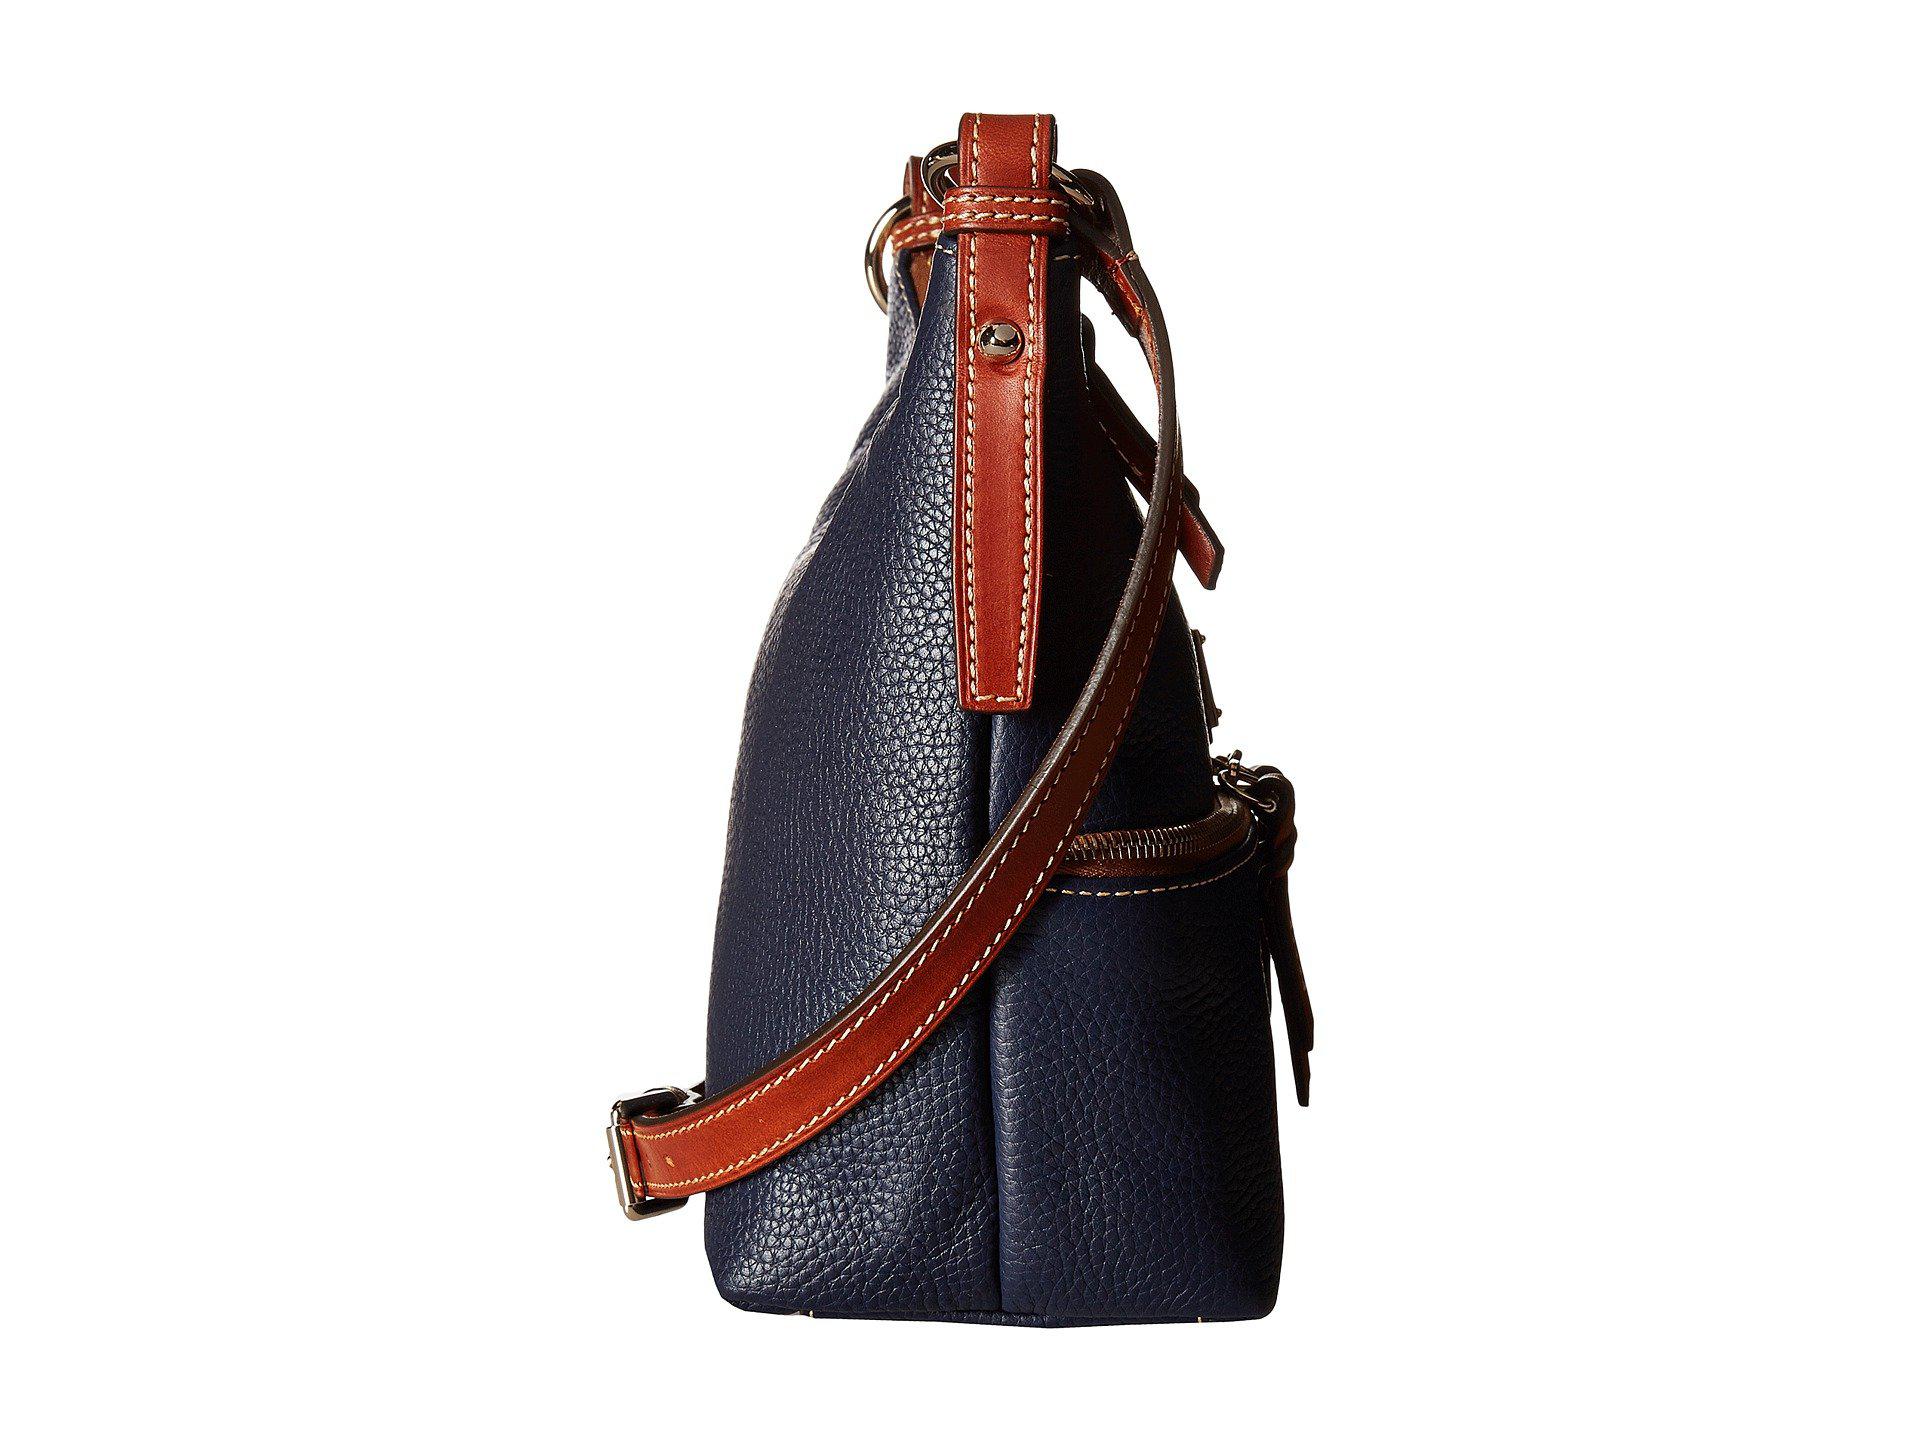 Midnight Blue Dooney & Bourke Pebble Grain Leather Alyssa Crossbody Shoulder Bag Purse Handbag 